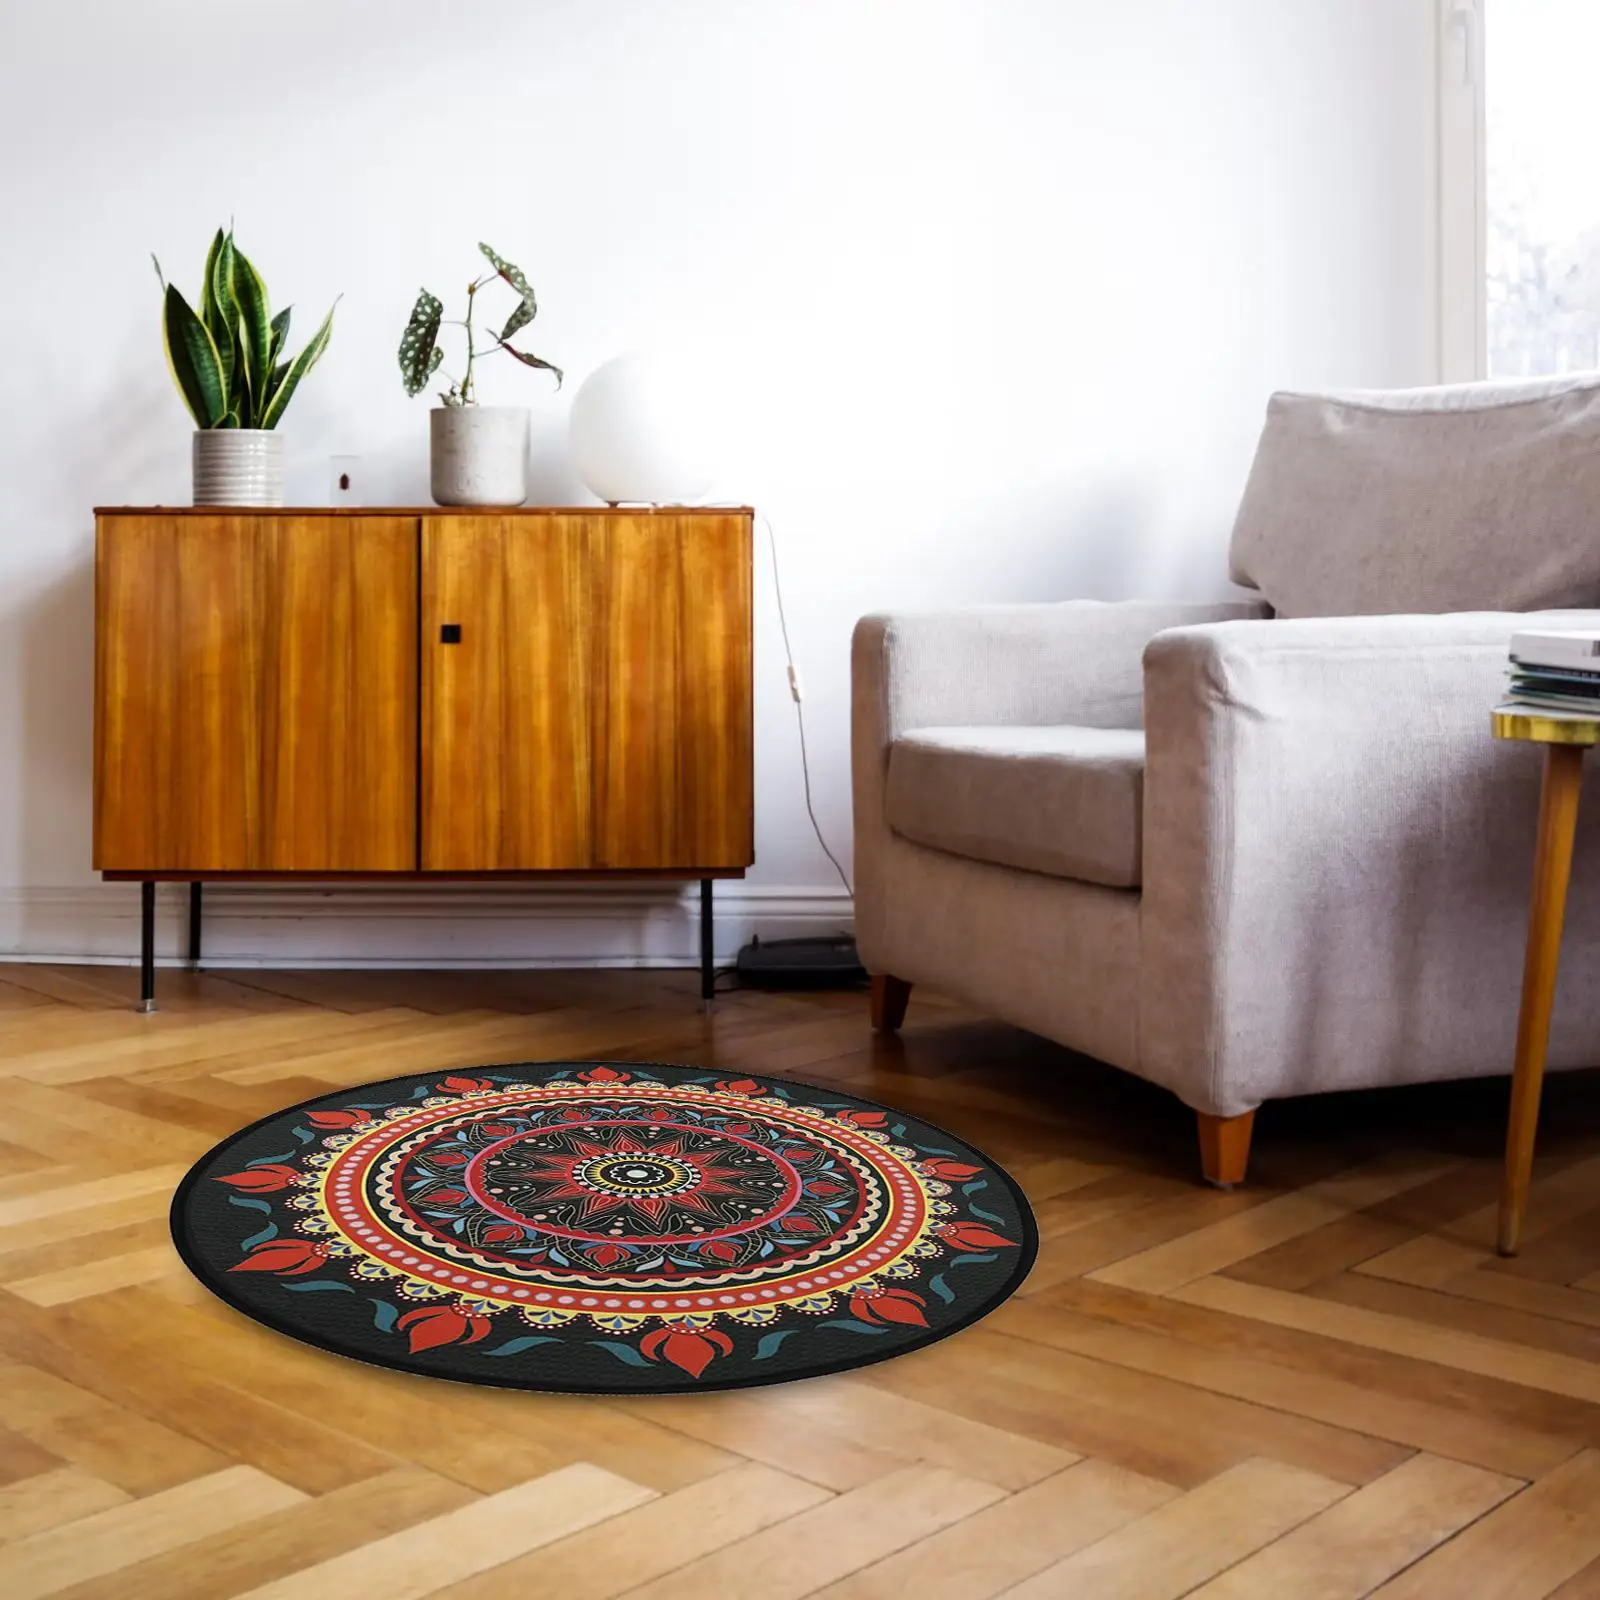 Mandala Pattern Round Yoga Floor Mat Meditation Mat Decorative Non Slip Cozy